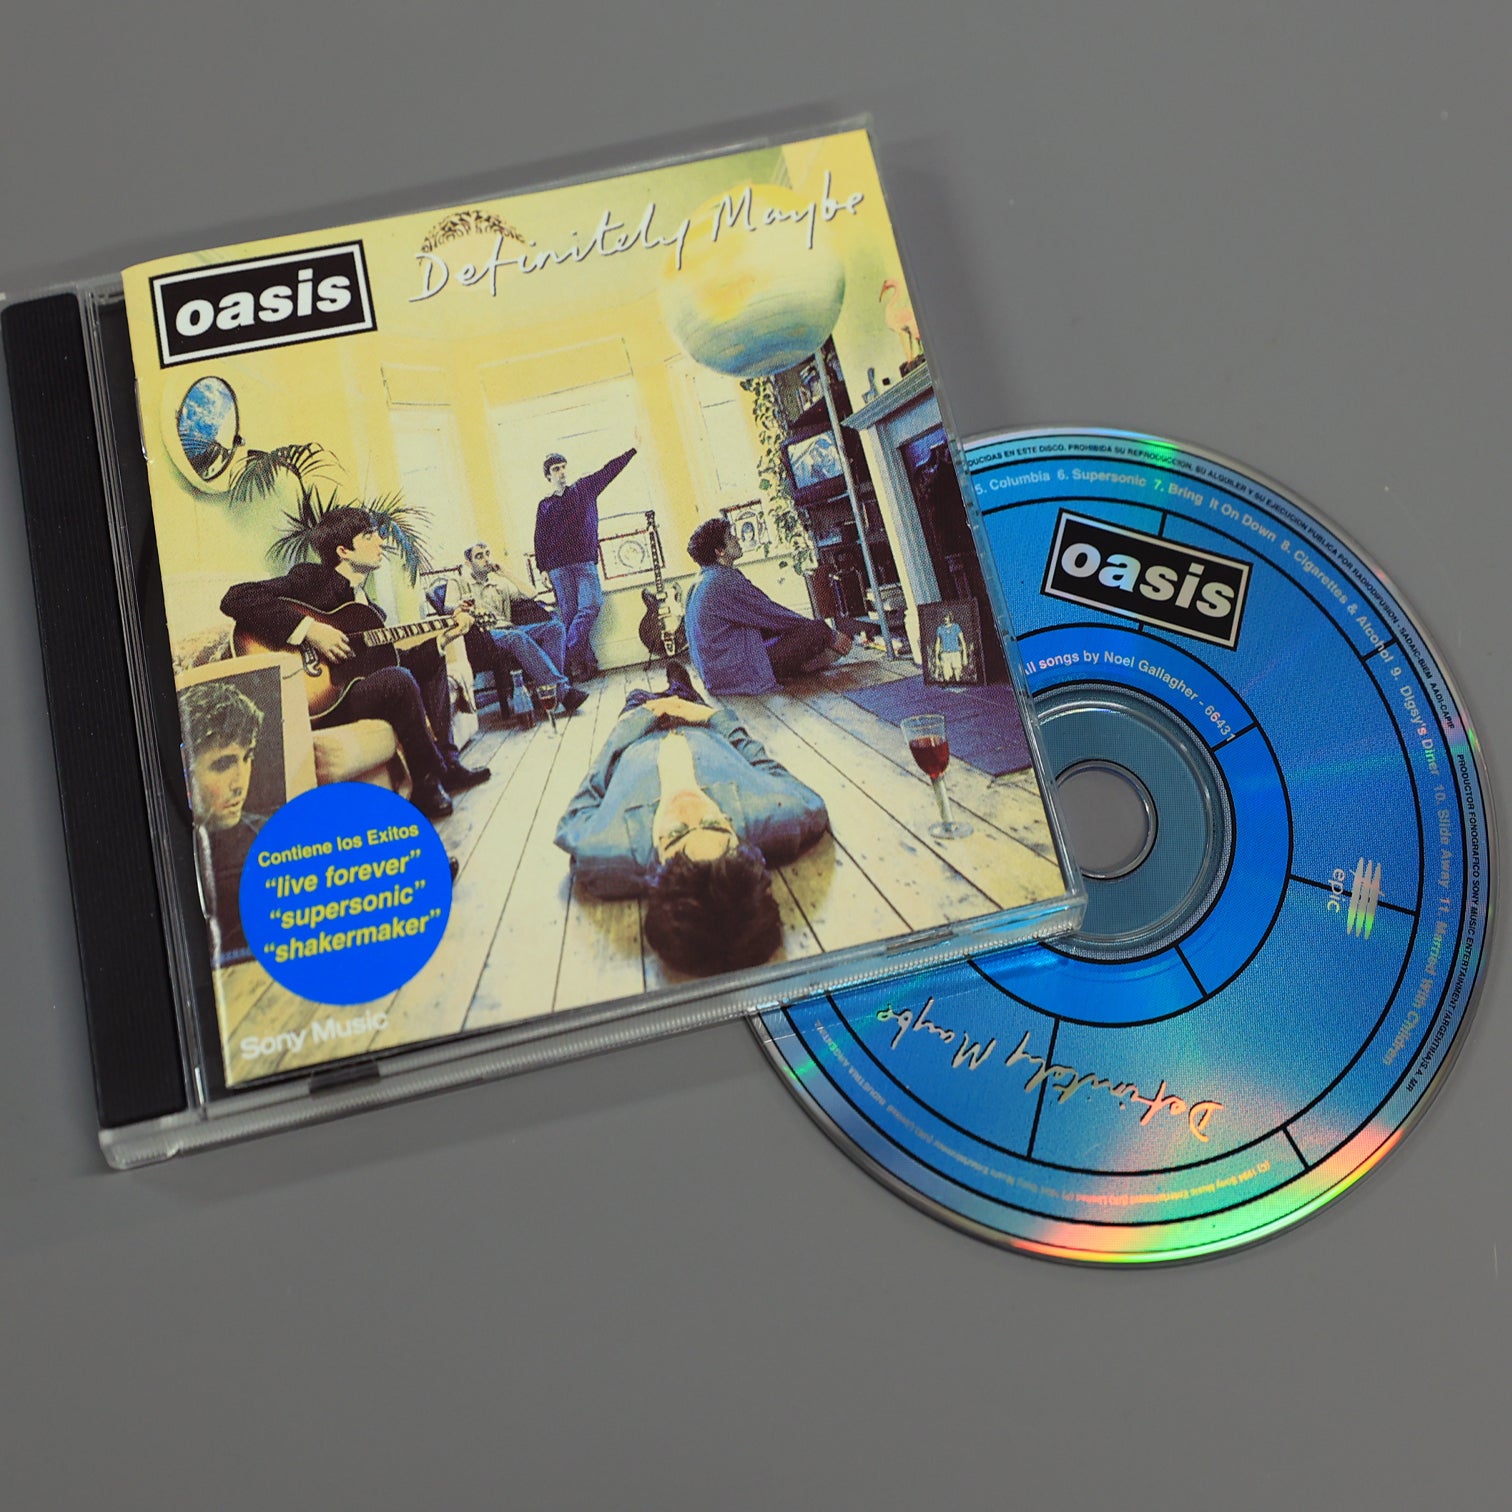 Oasis - Definitely Maybe ARGENTINA CD - New Item